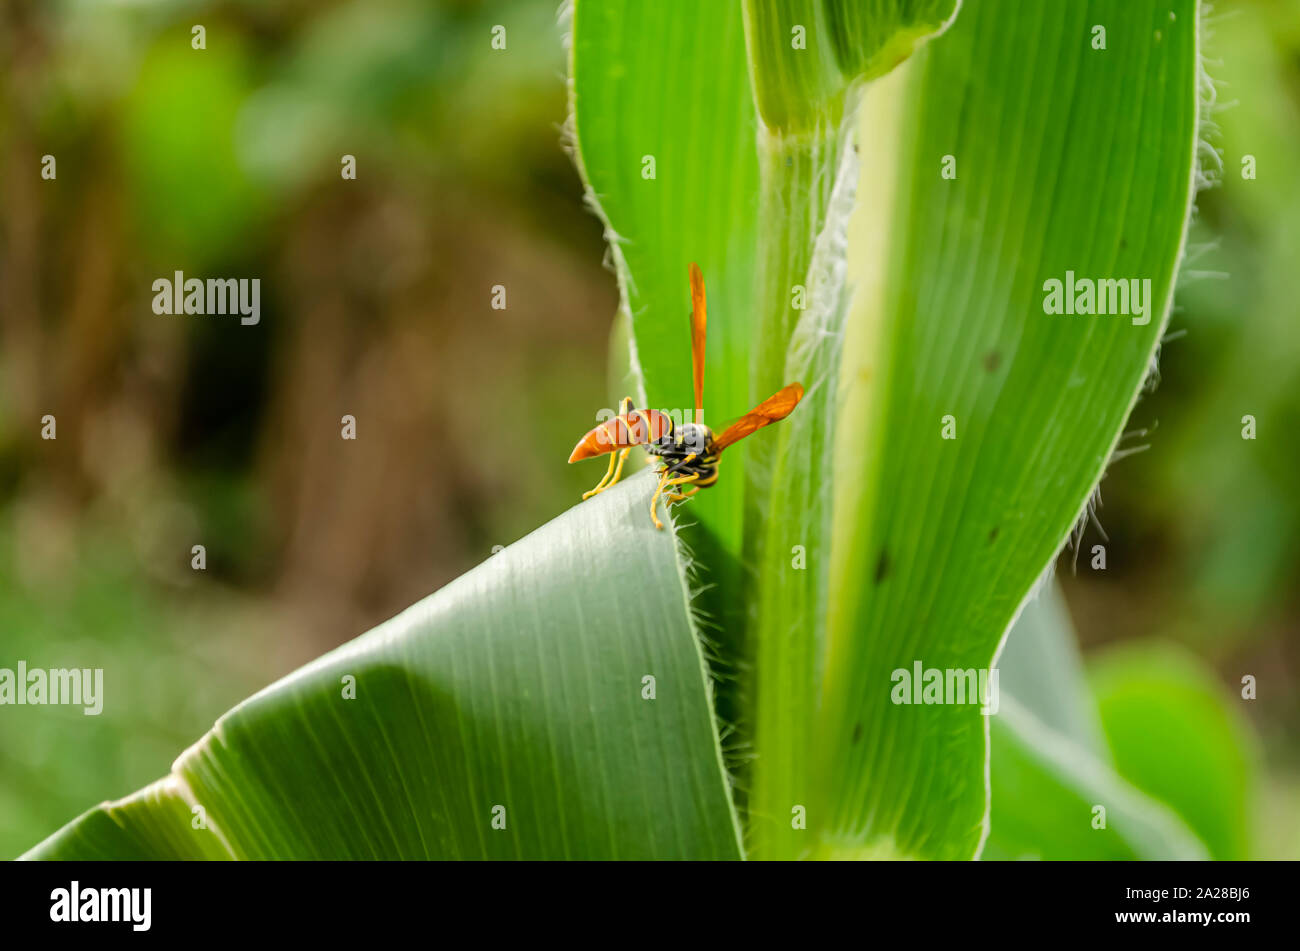 Wasp On Edge Of Corn Leaf Stock Photo